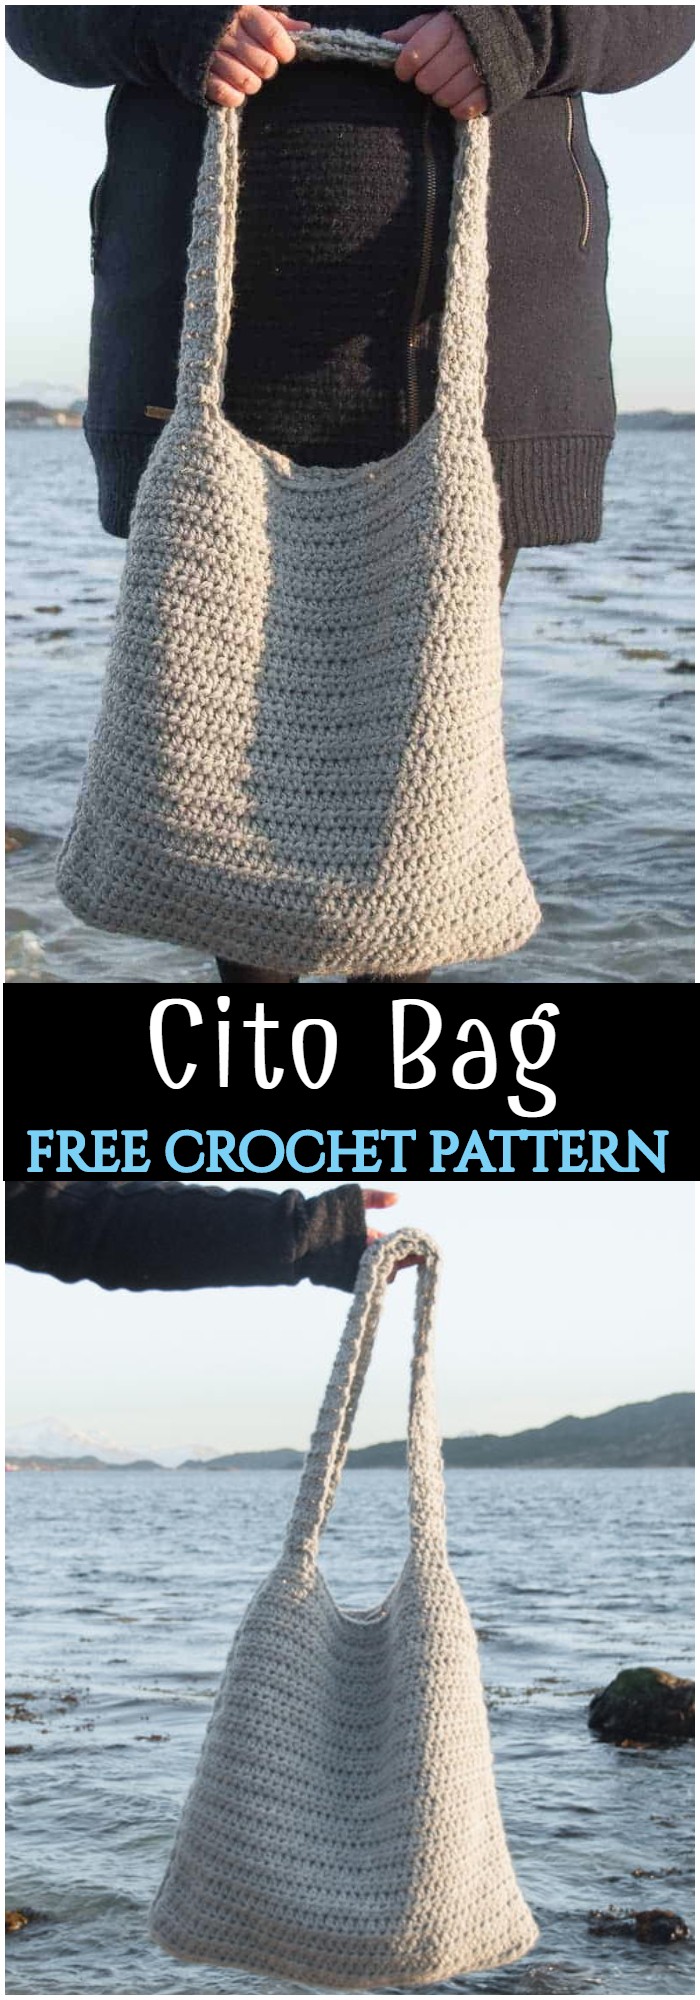 Crochet Pattern For Cito Bag